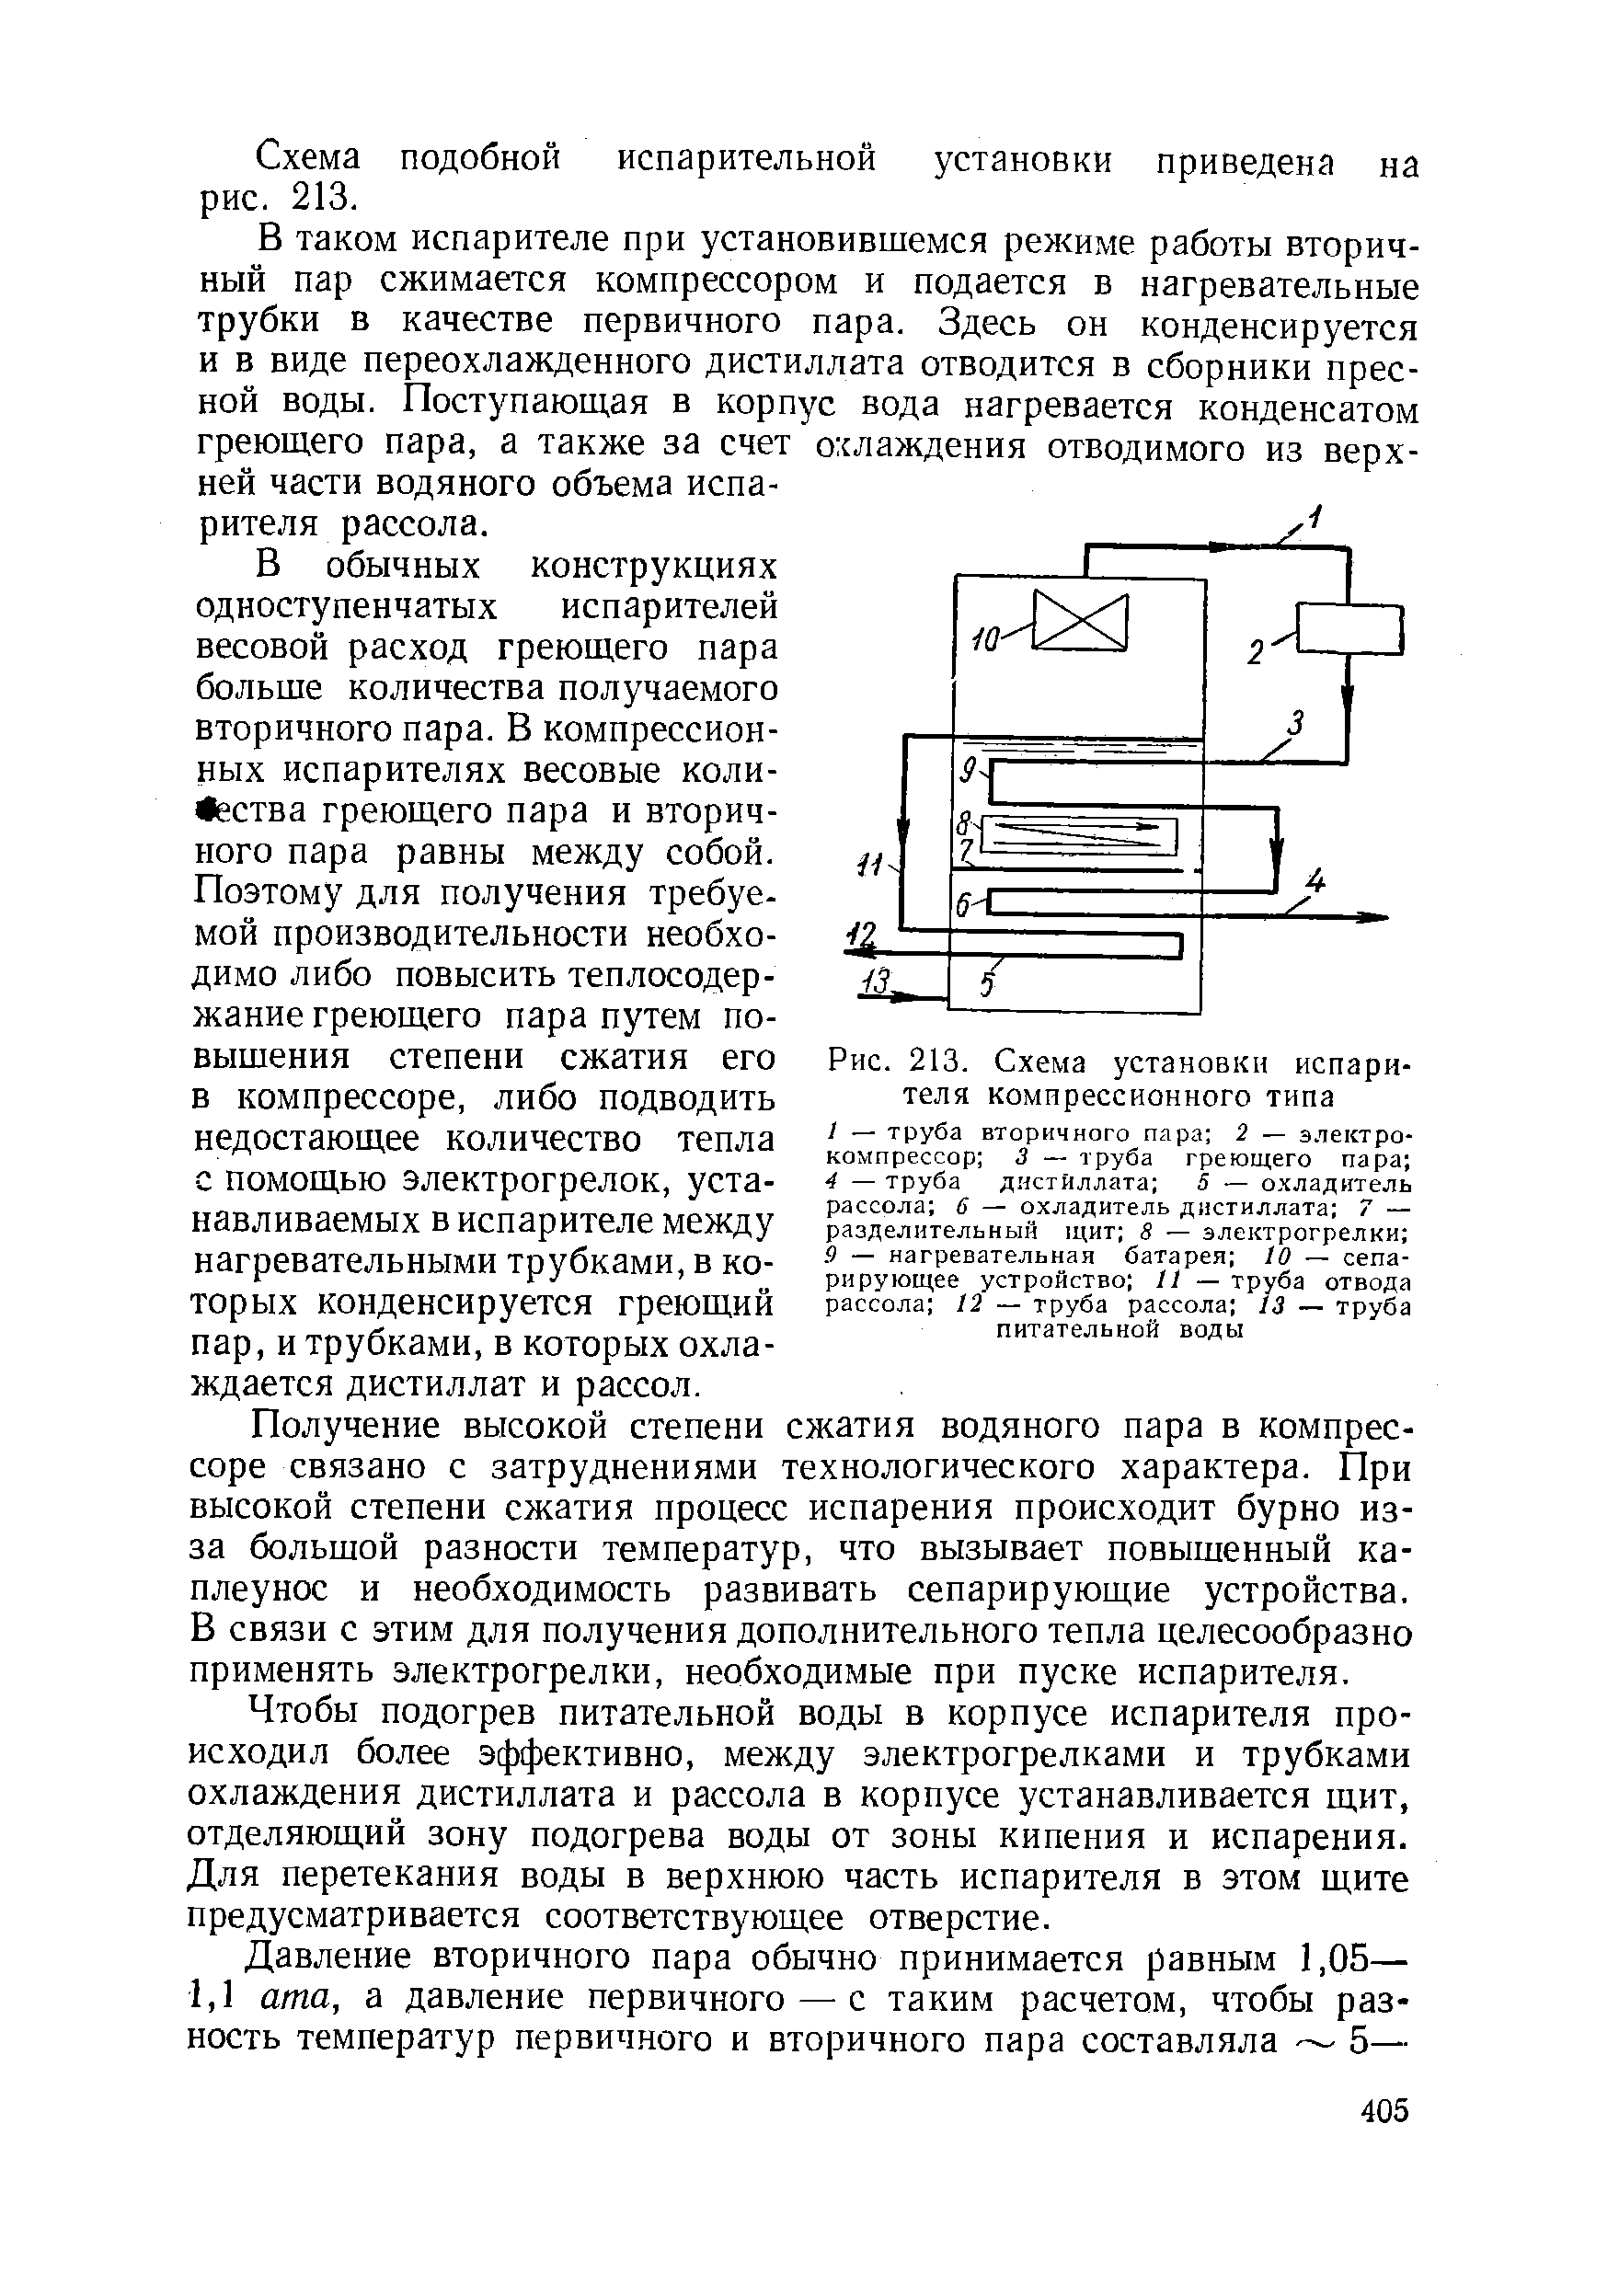 Рис. 213. Схема установки испарителя компрессионного типа
